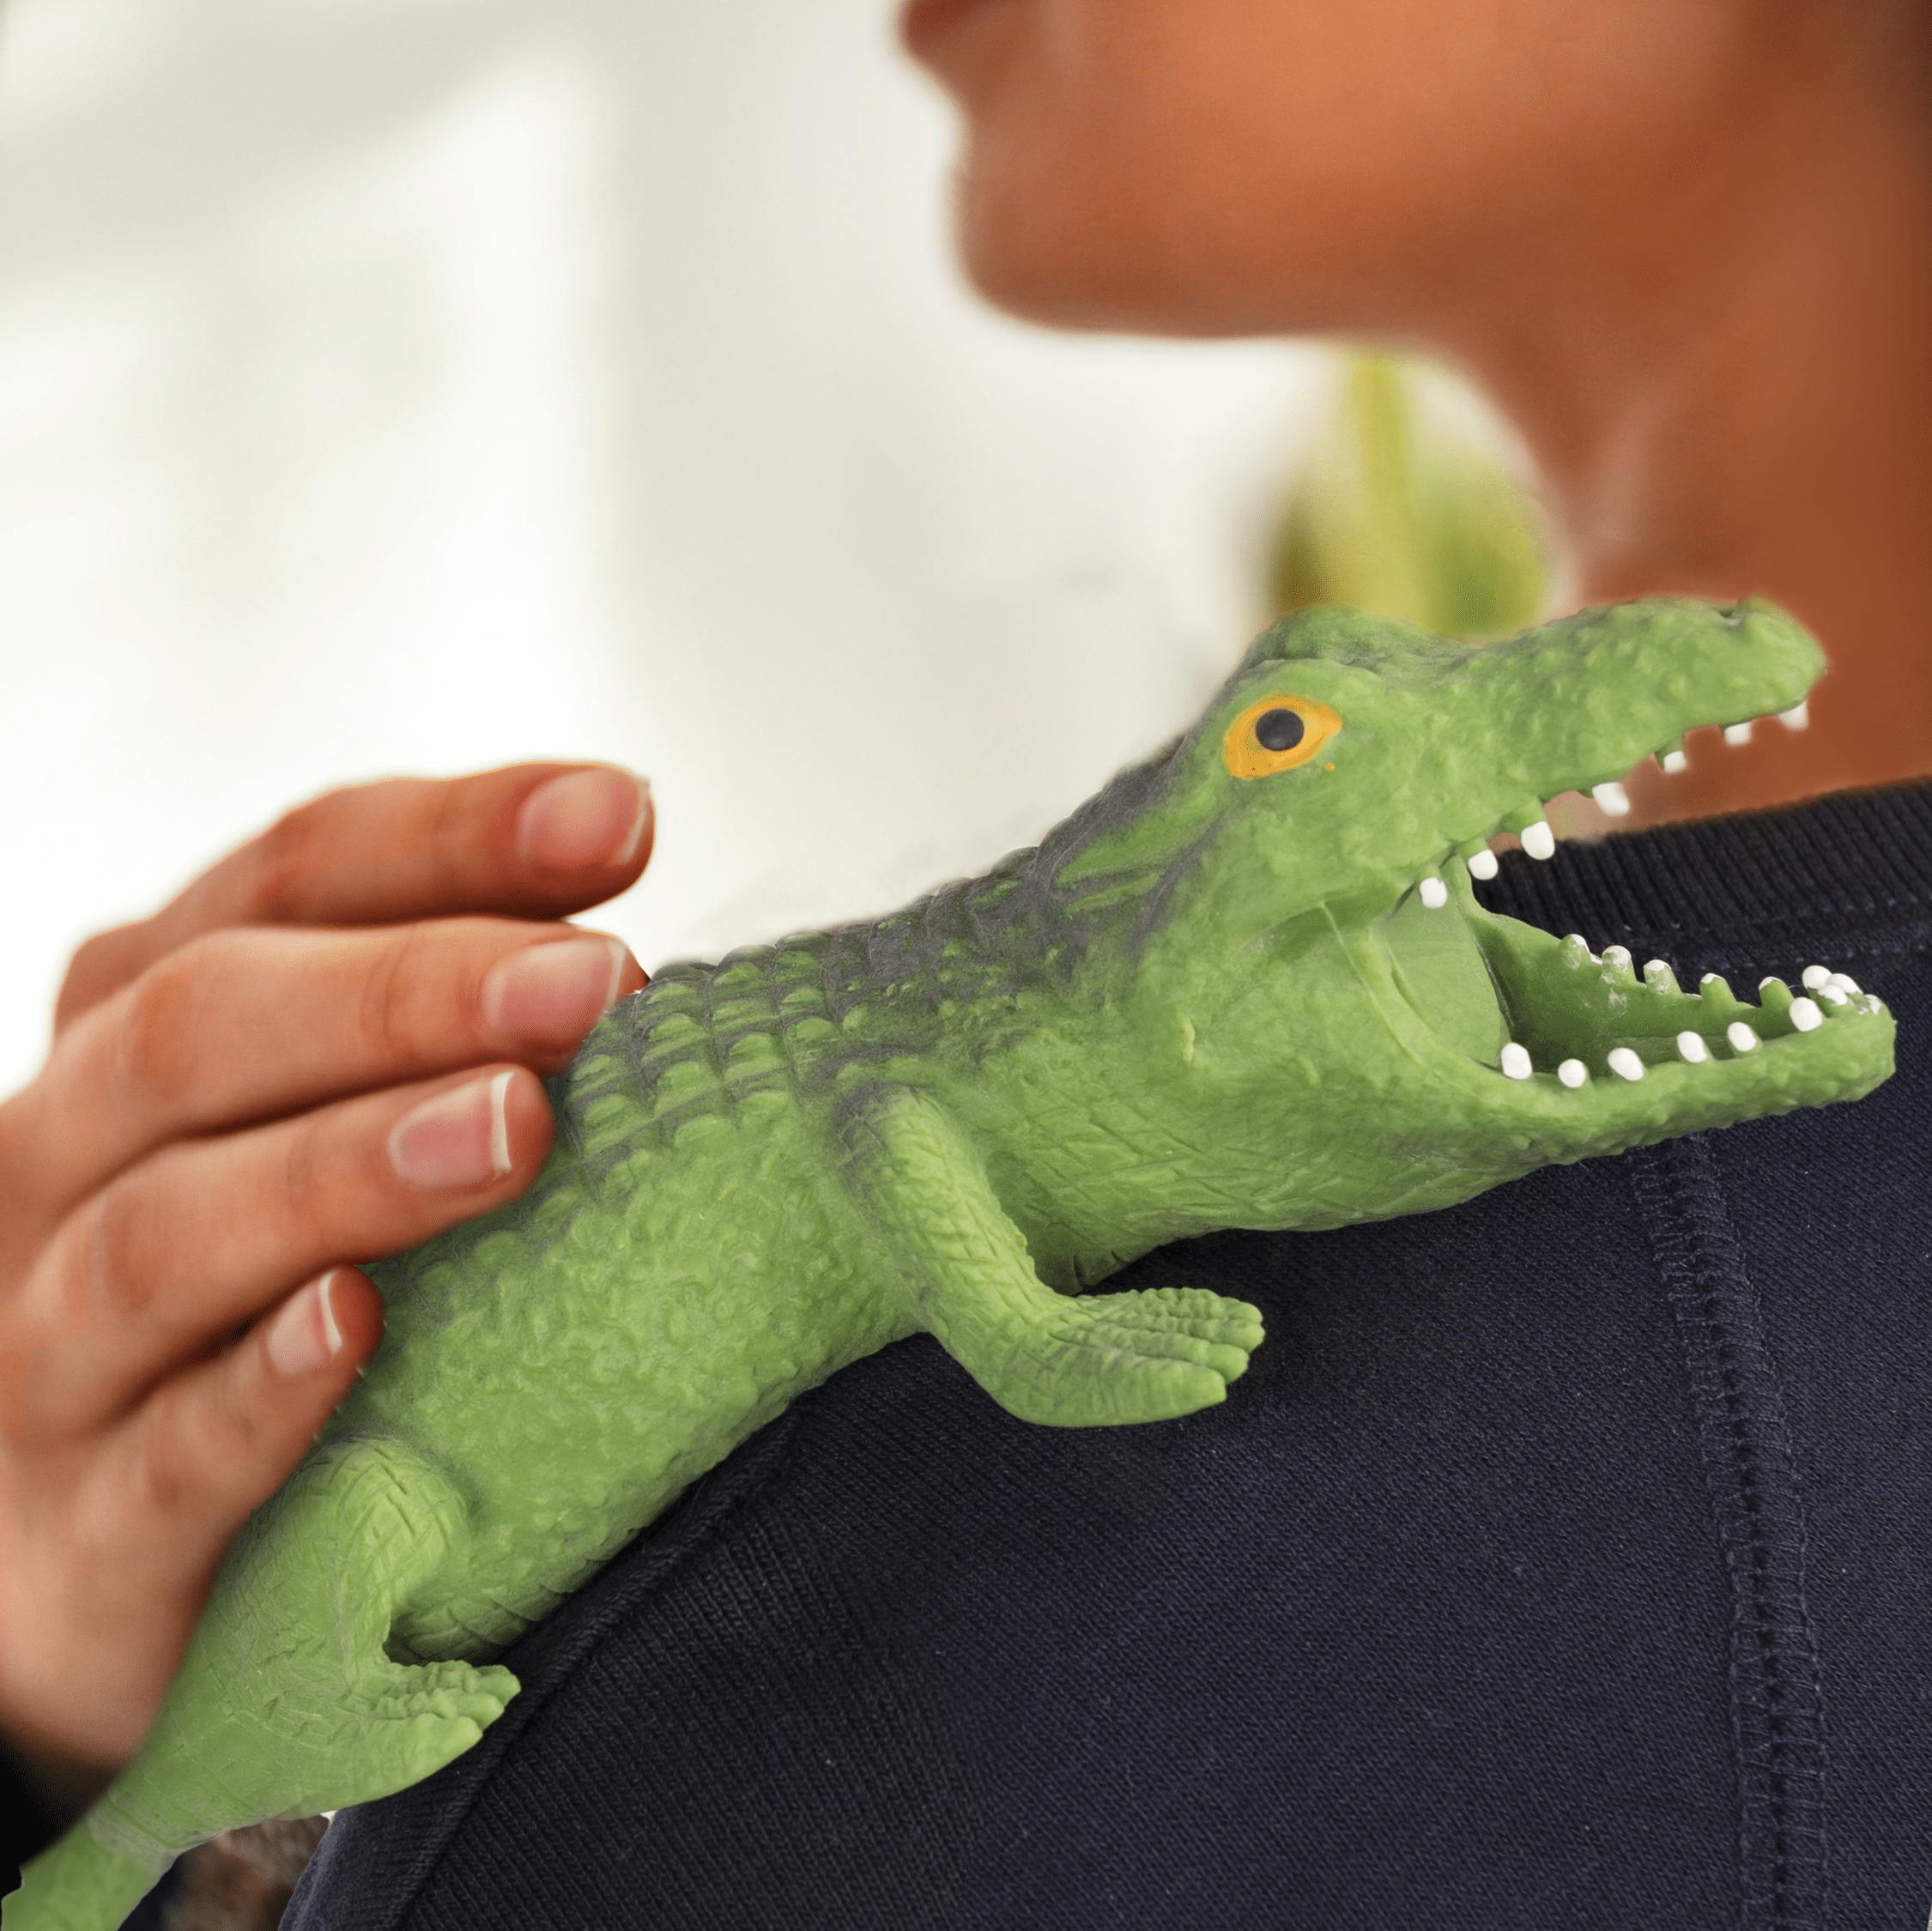 Tiaiidi 20 pcs stretchy fidget toy,colorful dinosaur stretchy